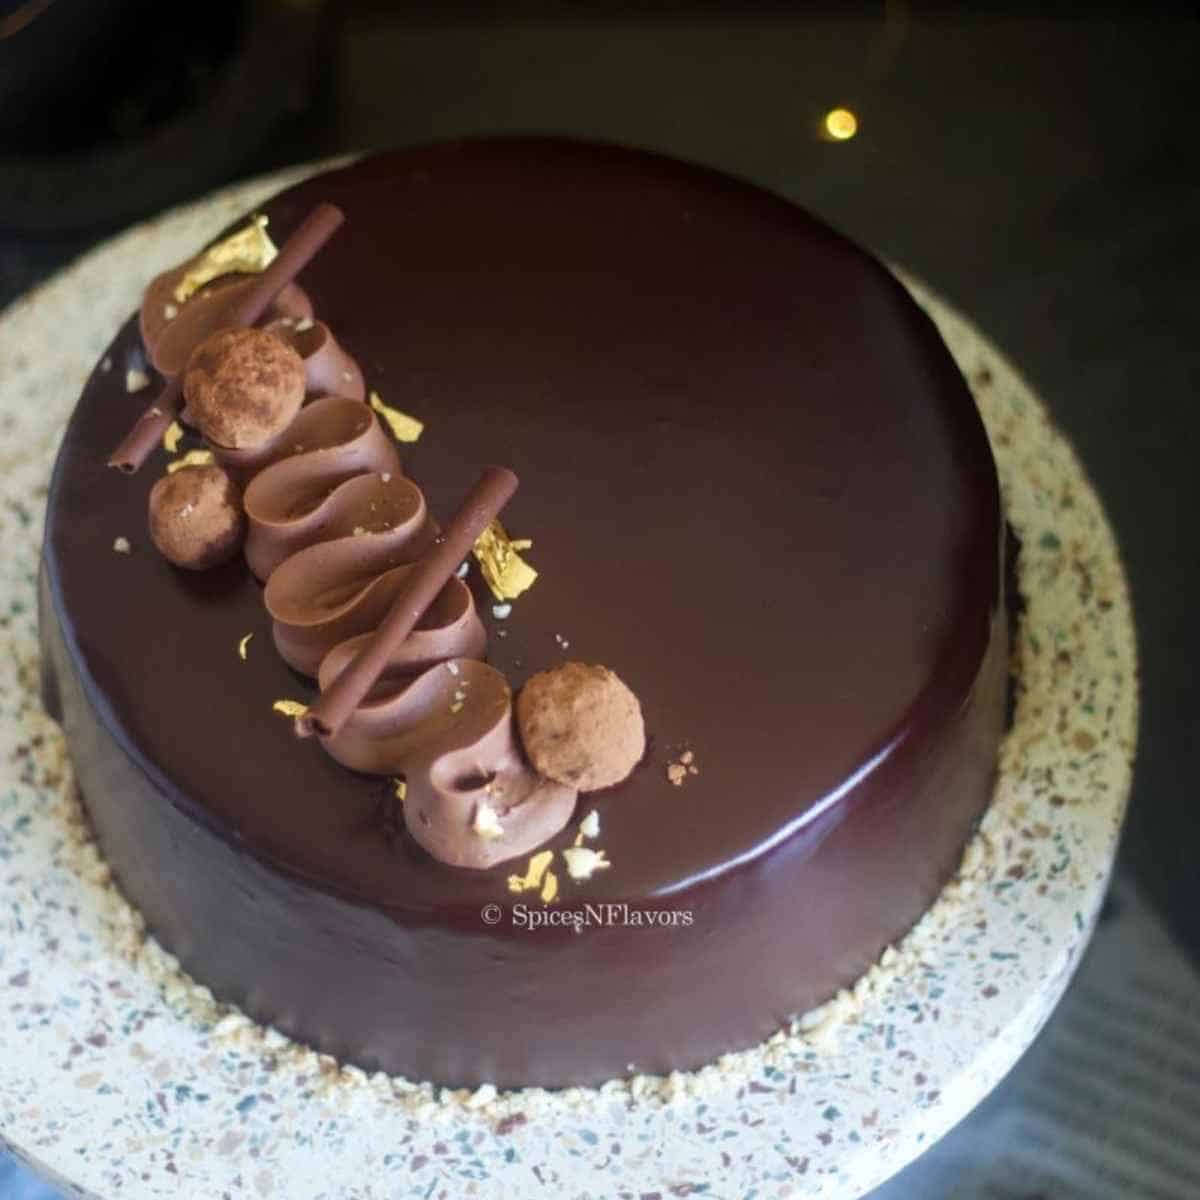 Chocolate Ganache Cake - In Bloom Bakery